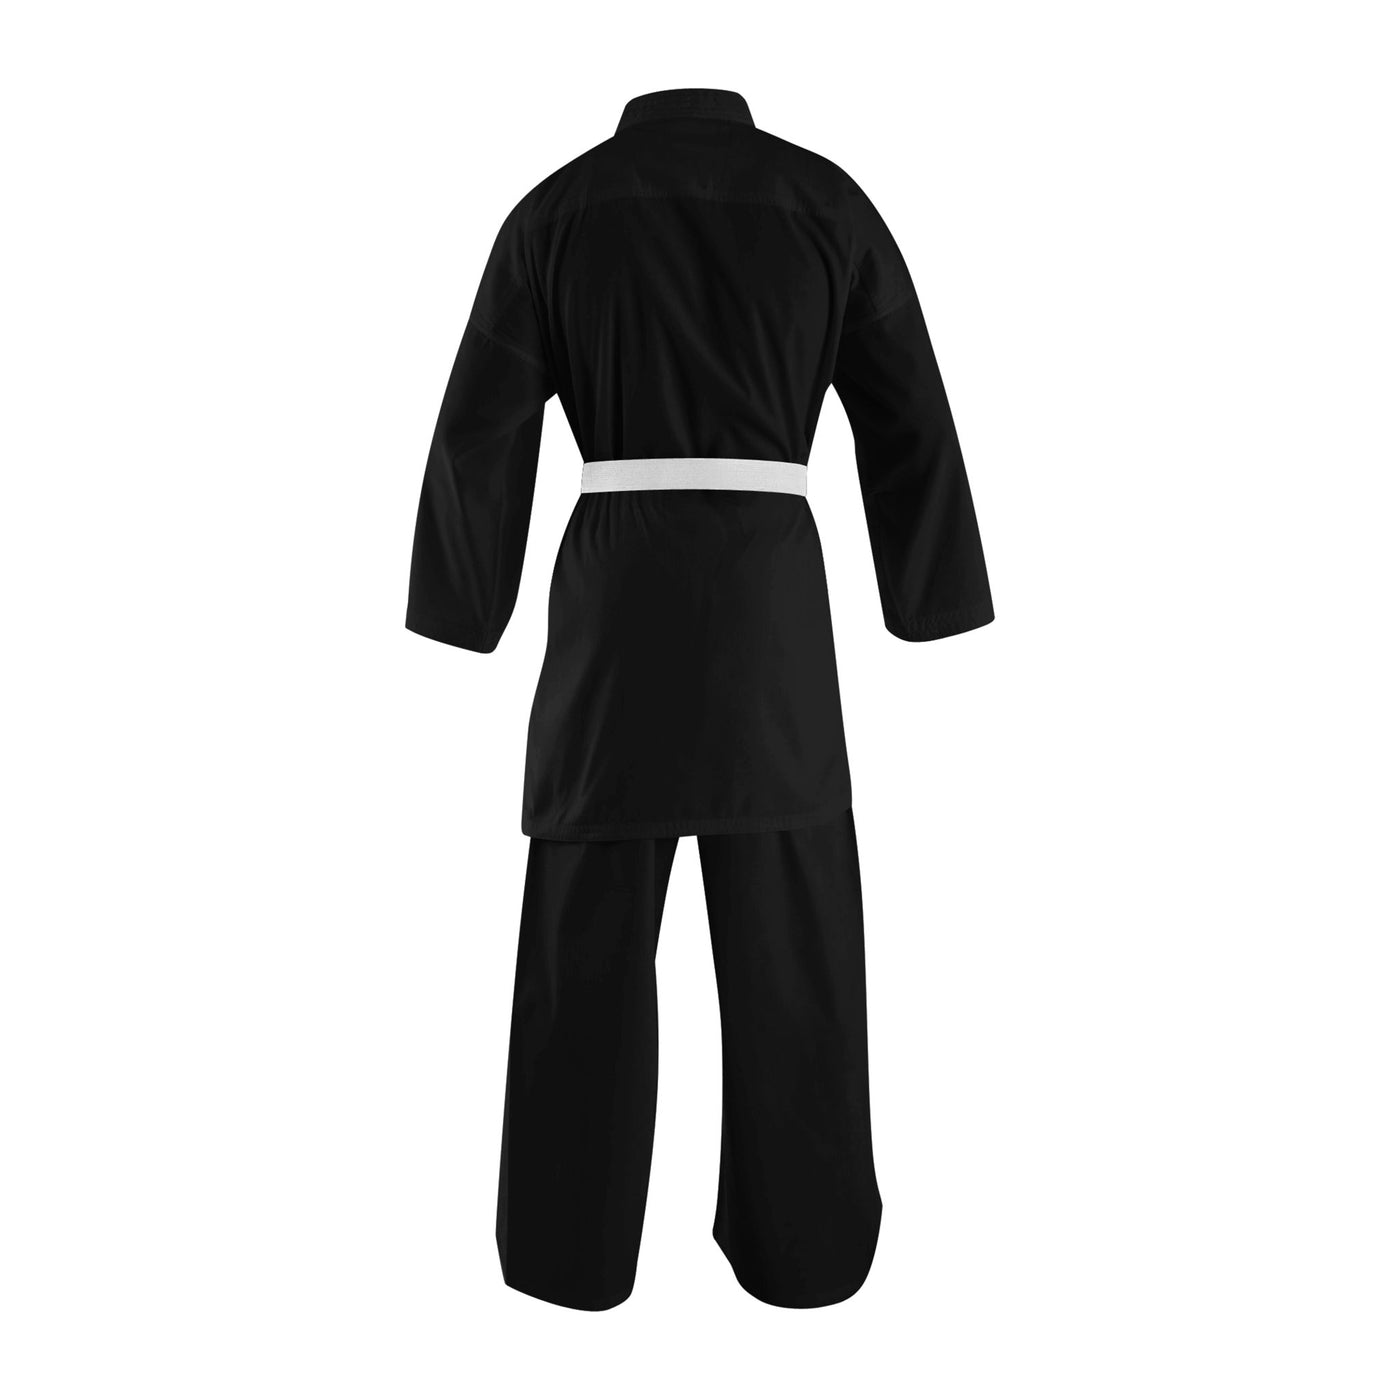 8 oz. Plain Black Light Weight Karate Uniform - Summo Sports